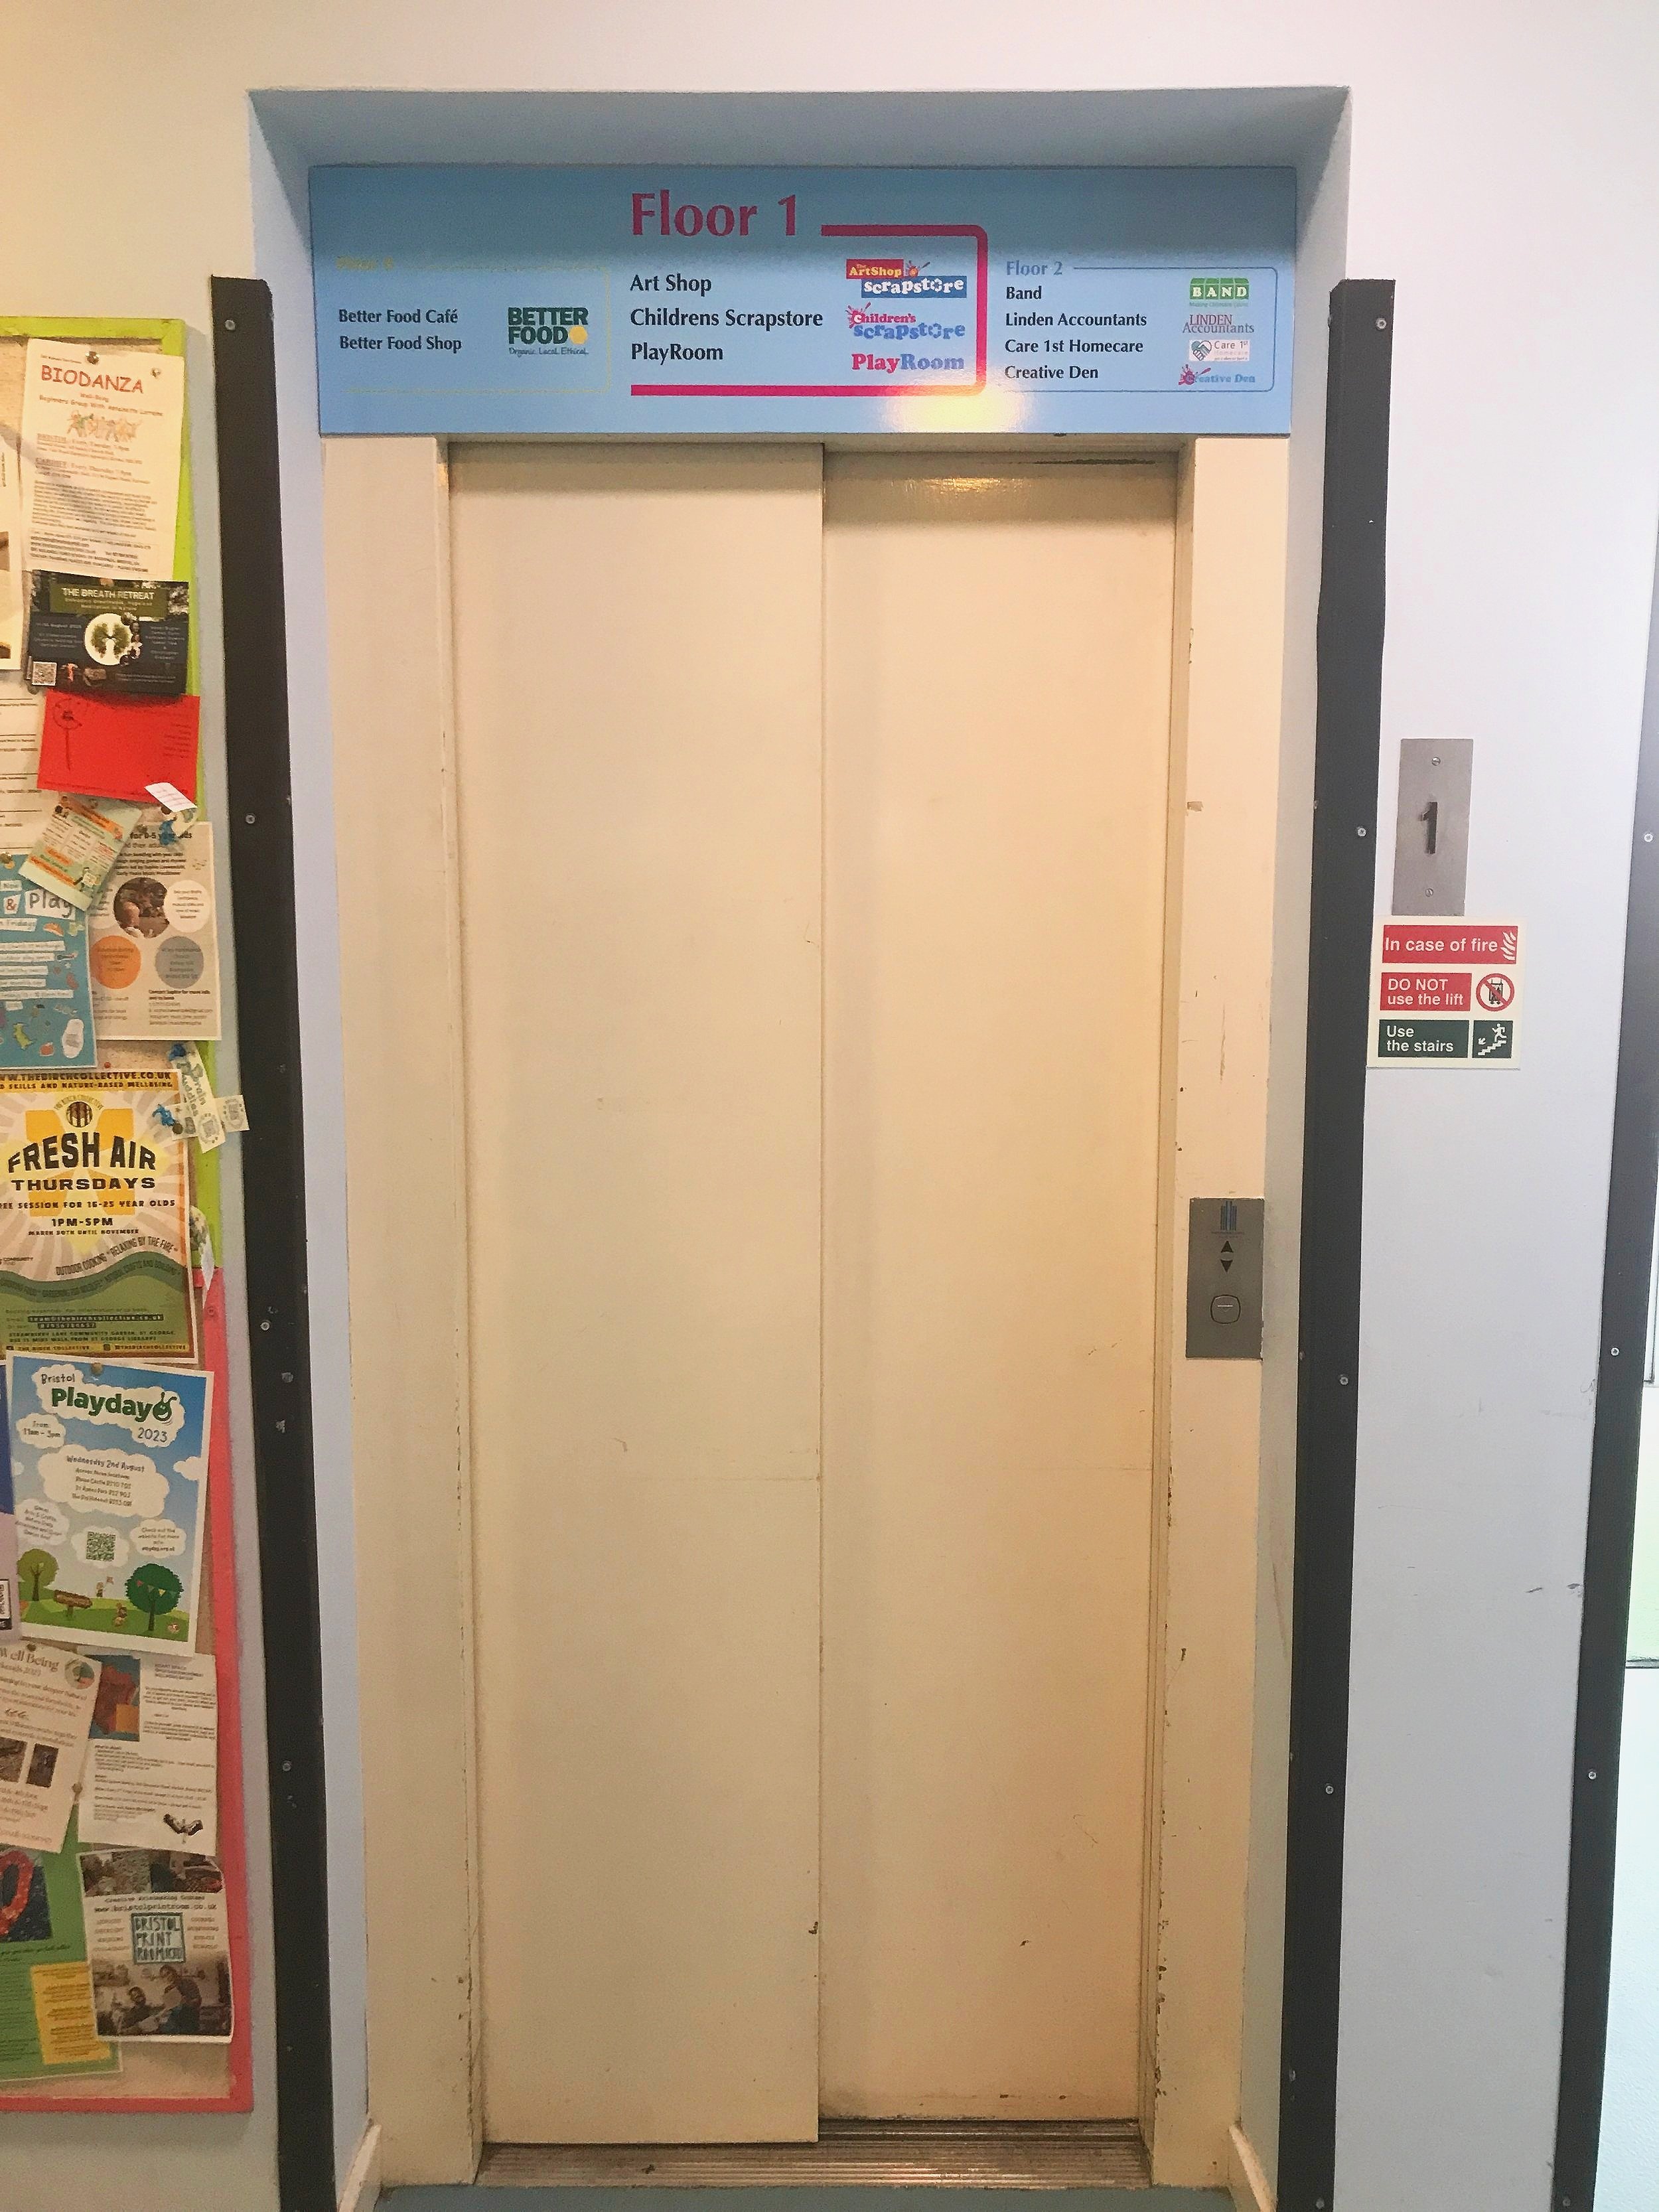  Accessible lift in Bristol Children’s Scrapstore to access first floor 